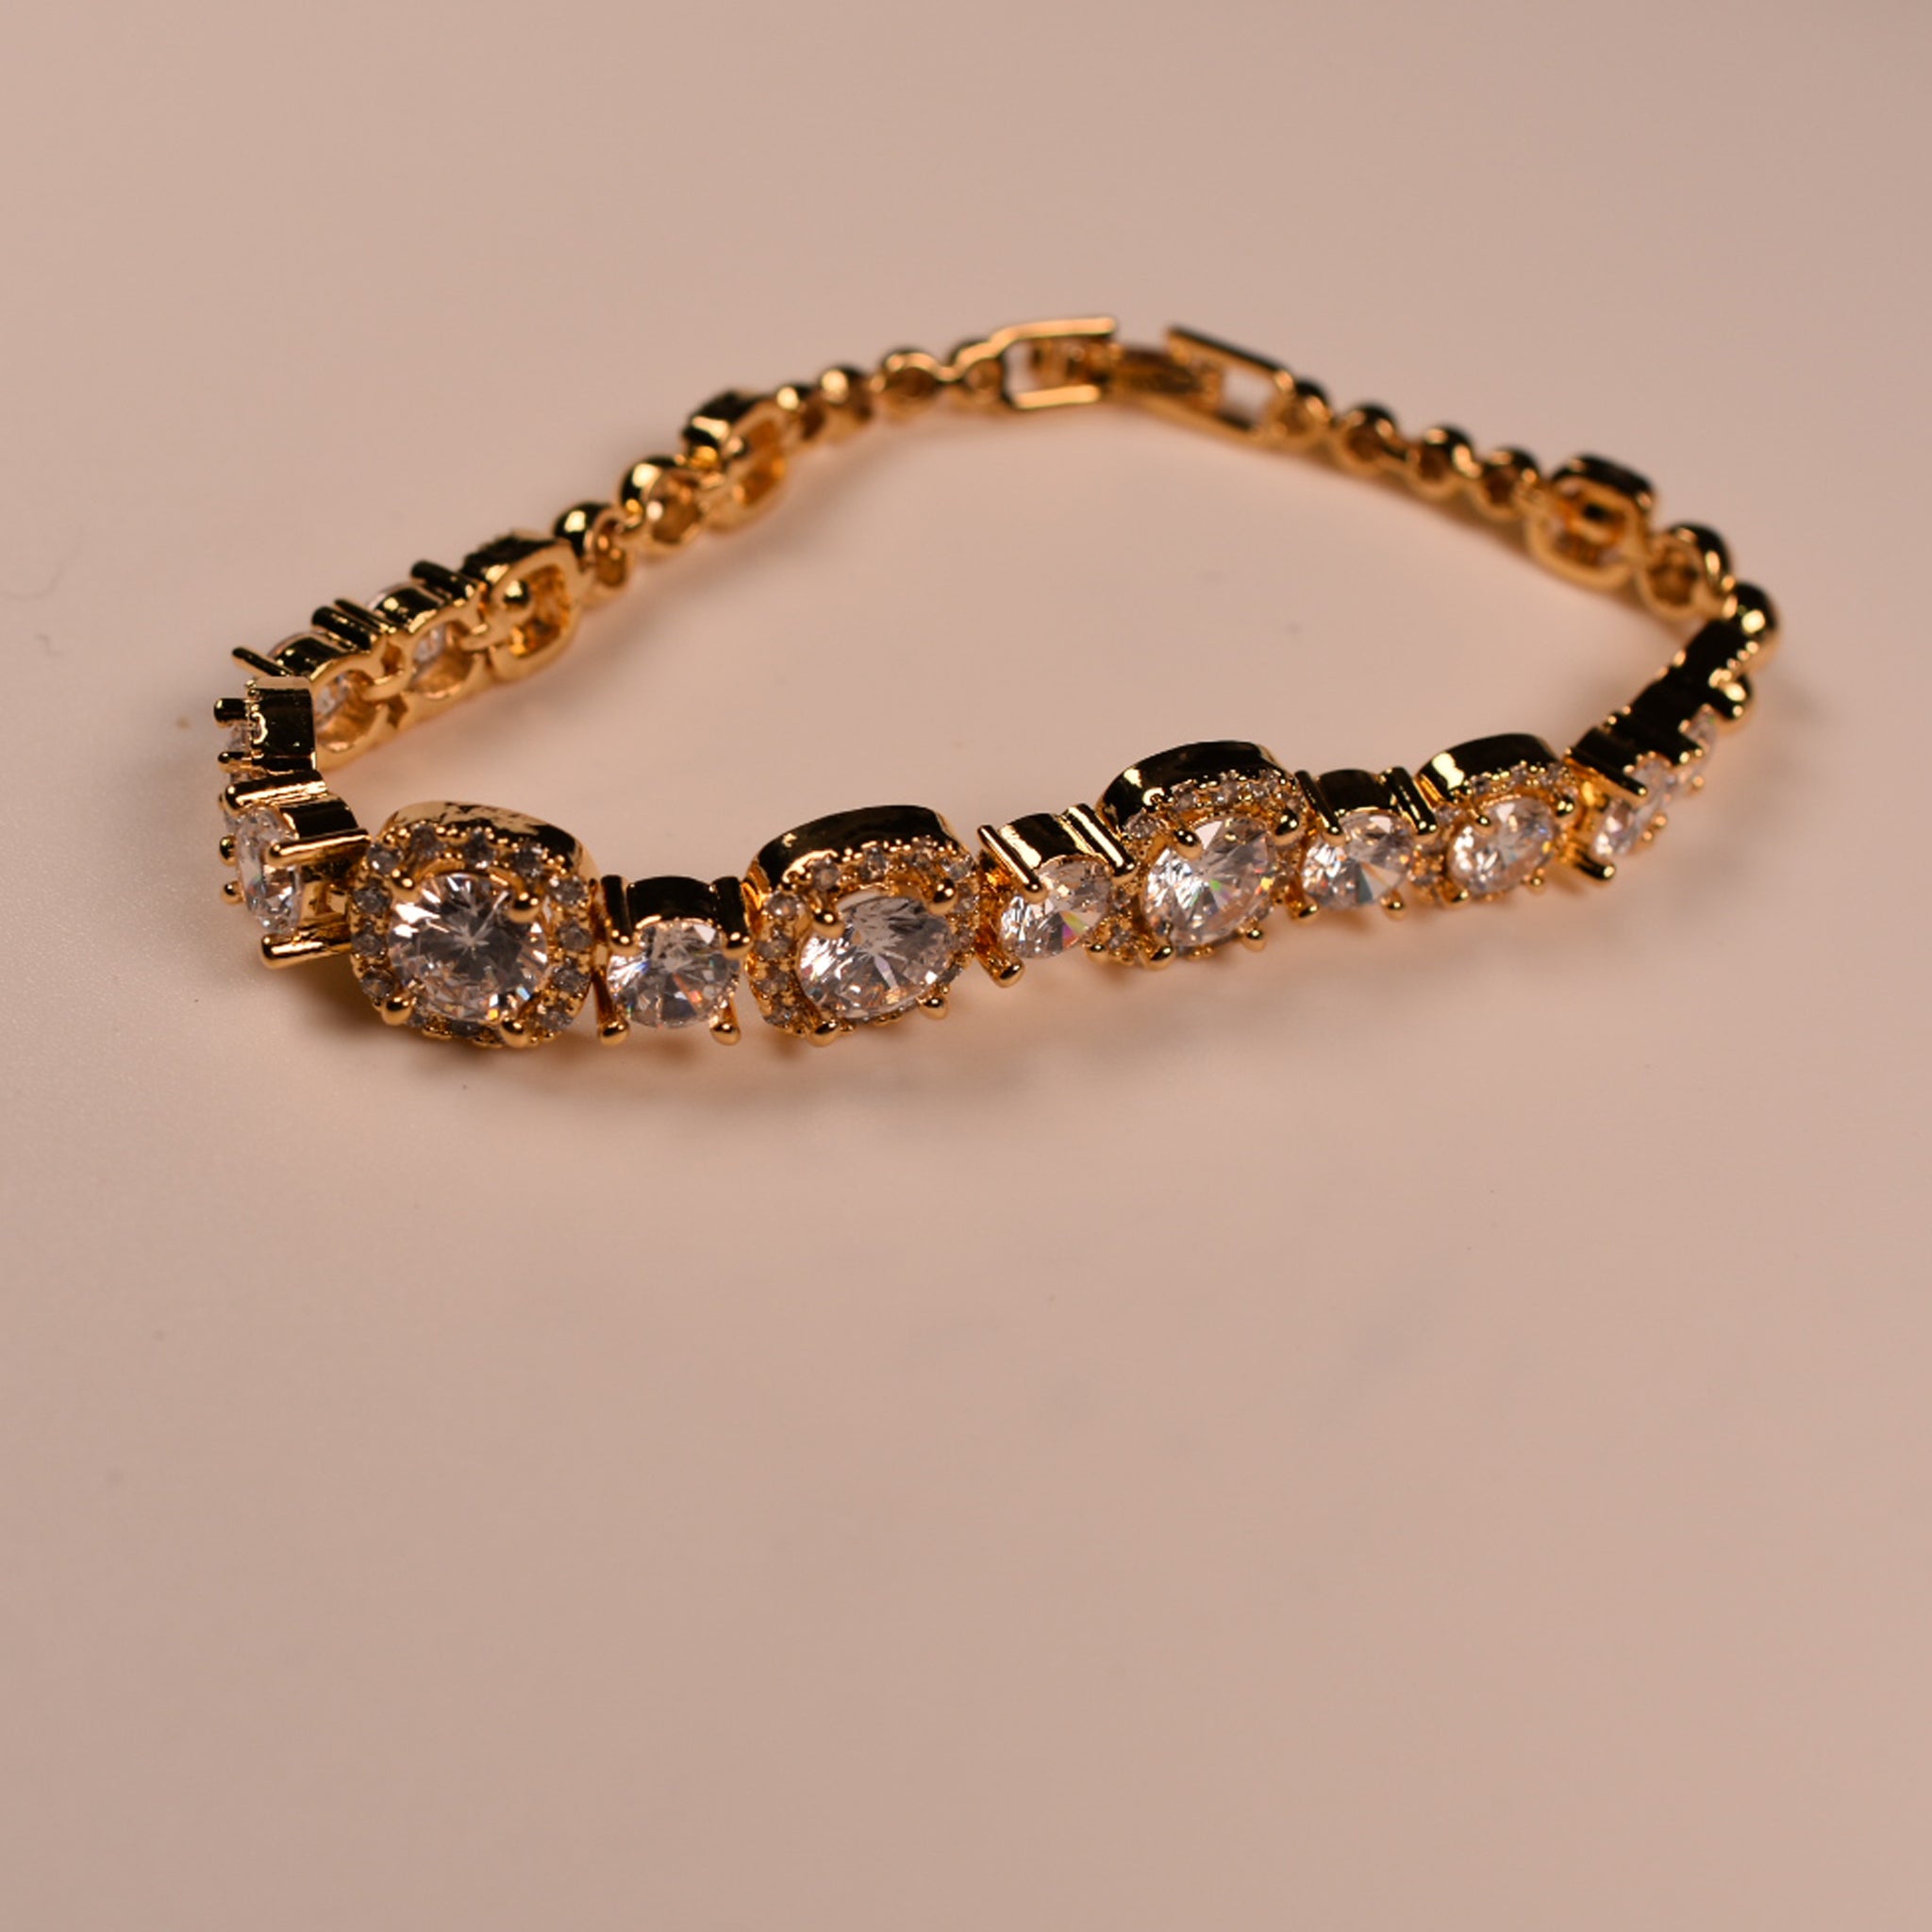 Pearls of Korea Aesthetic Styled Bracelet